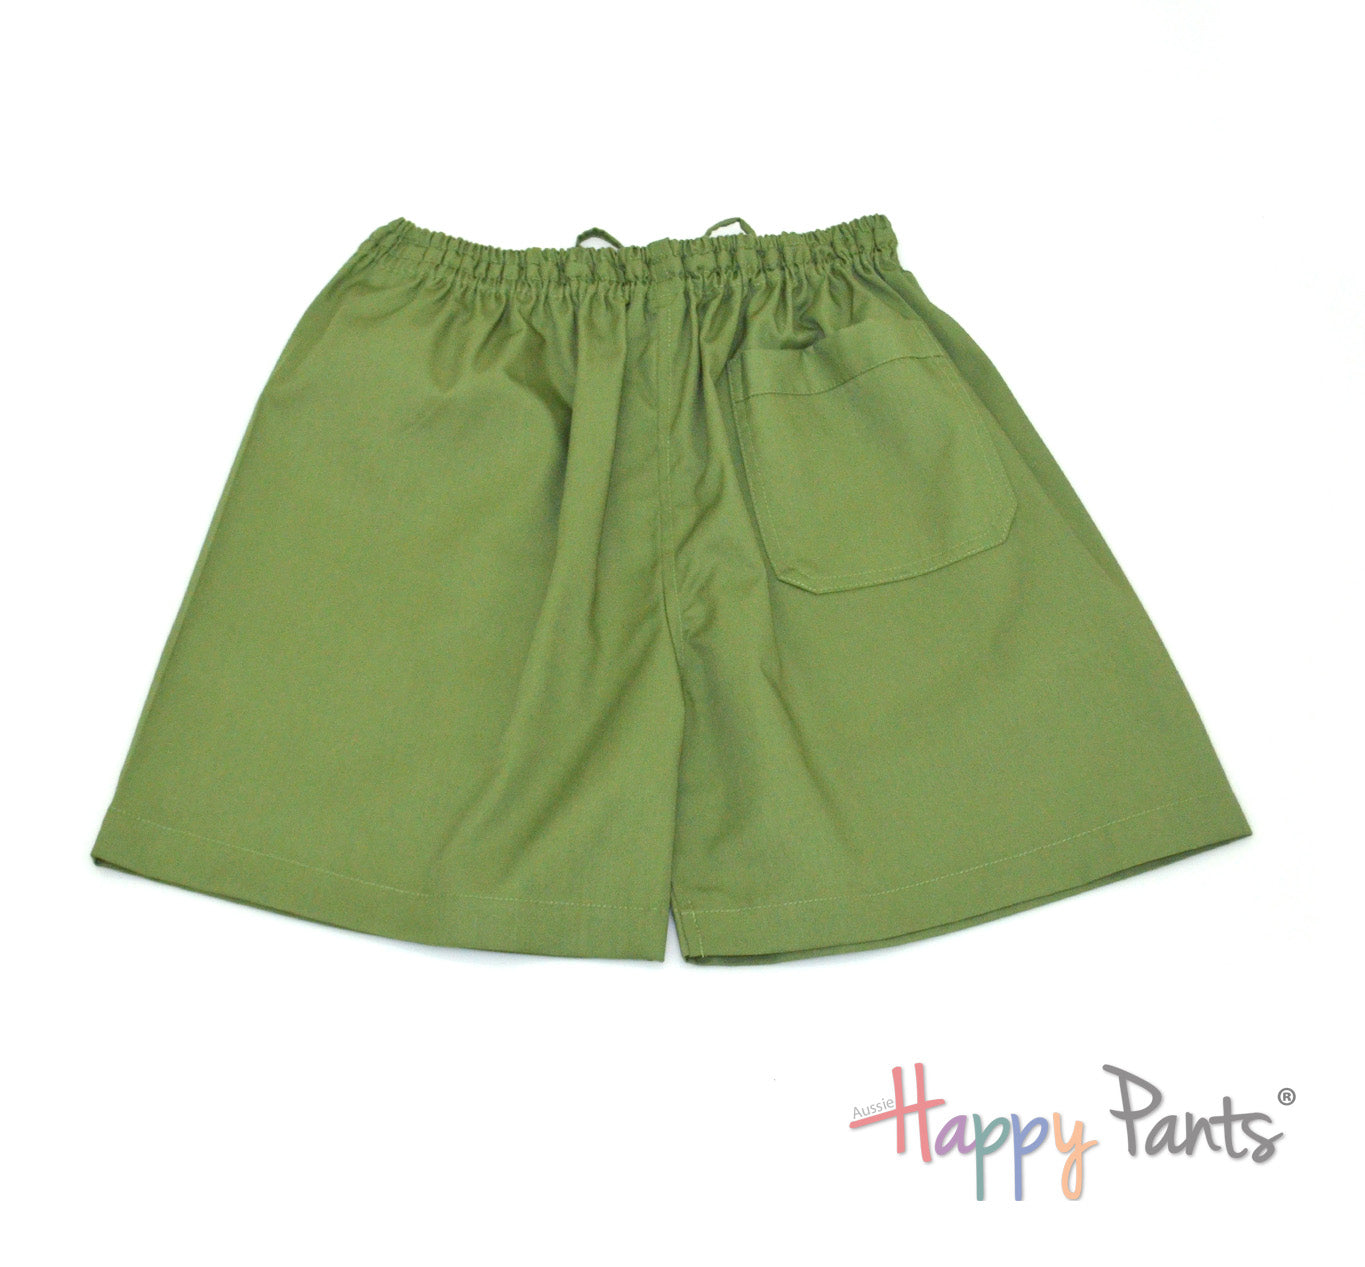 green shorts with elastic waist holiday pants resort wear Australia comfy bermudas